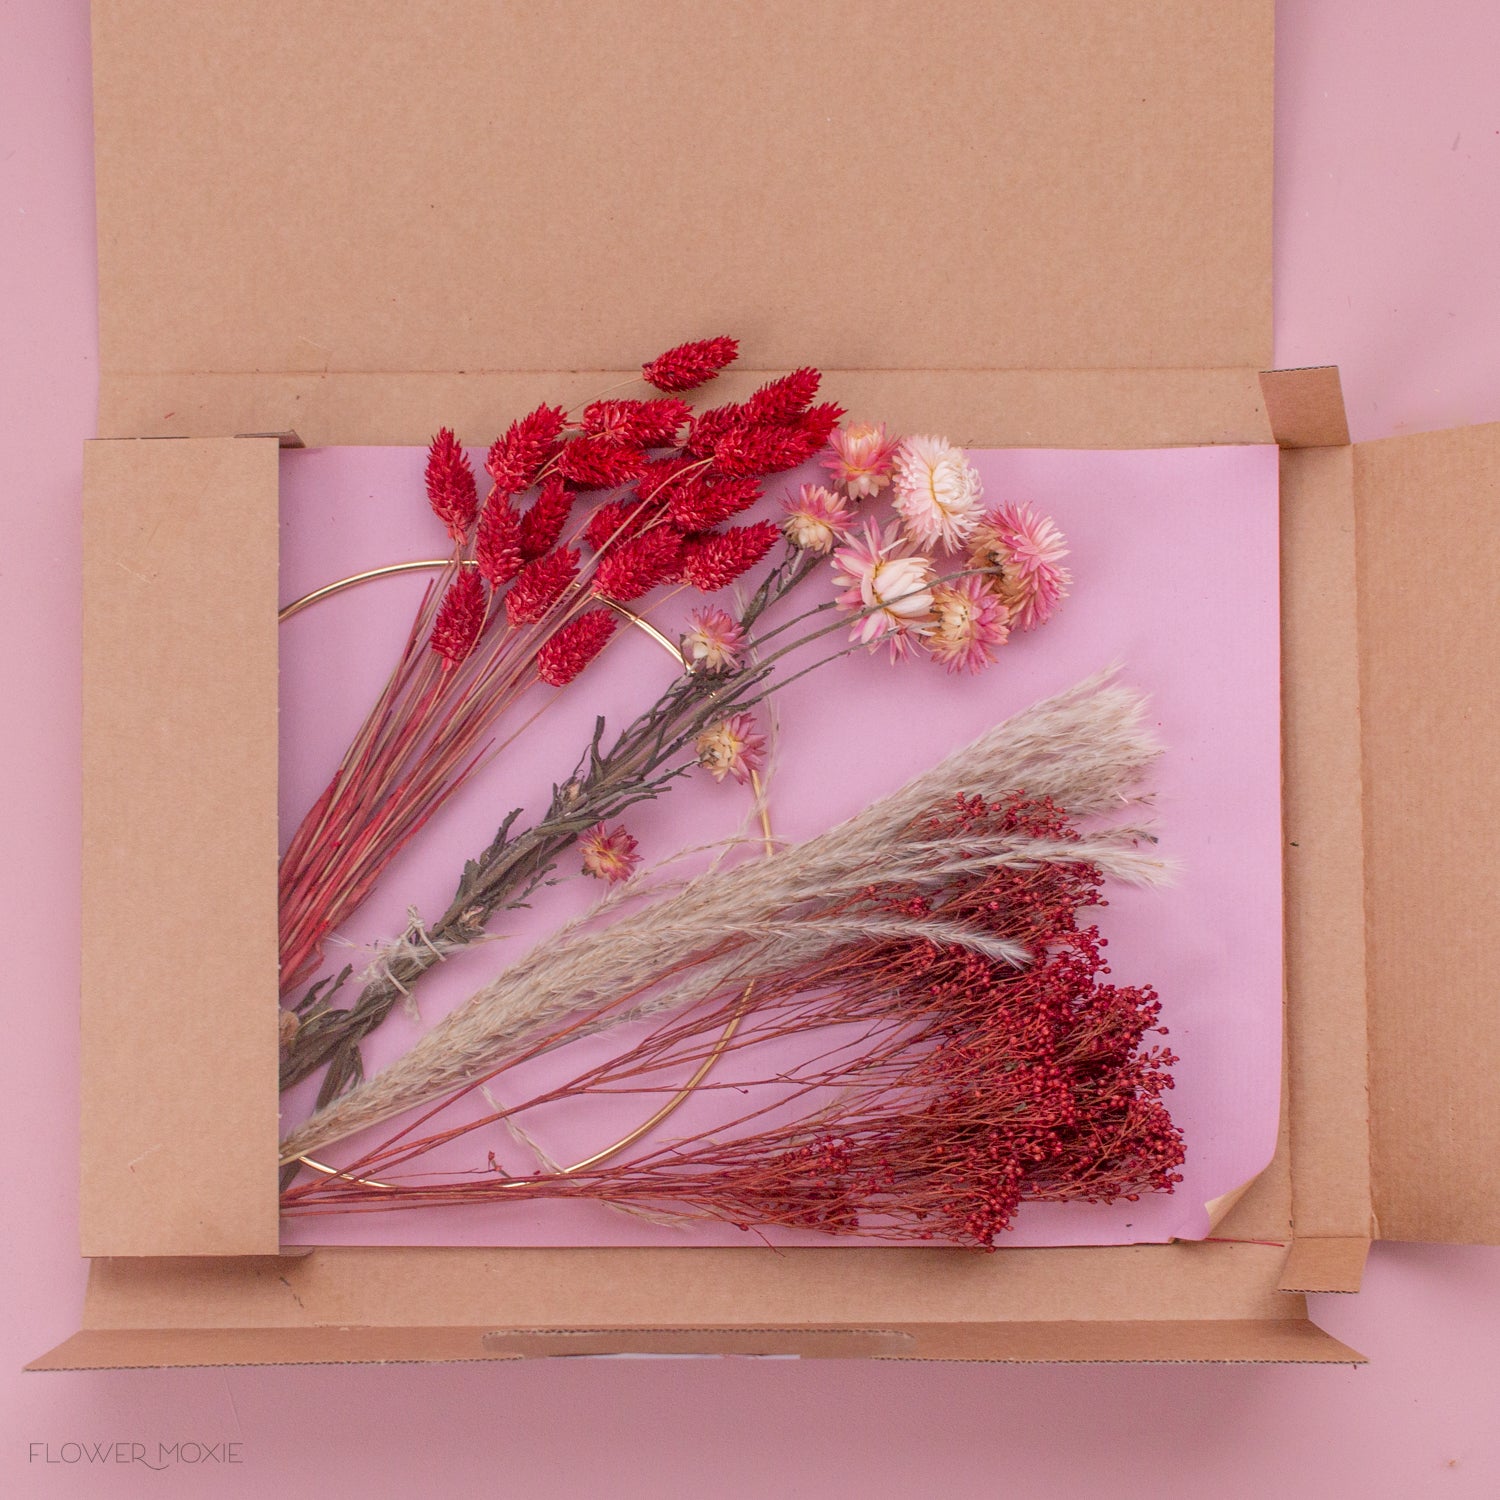 Dried Flowers Wreath Kit, Flower Moxie Supply